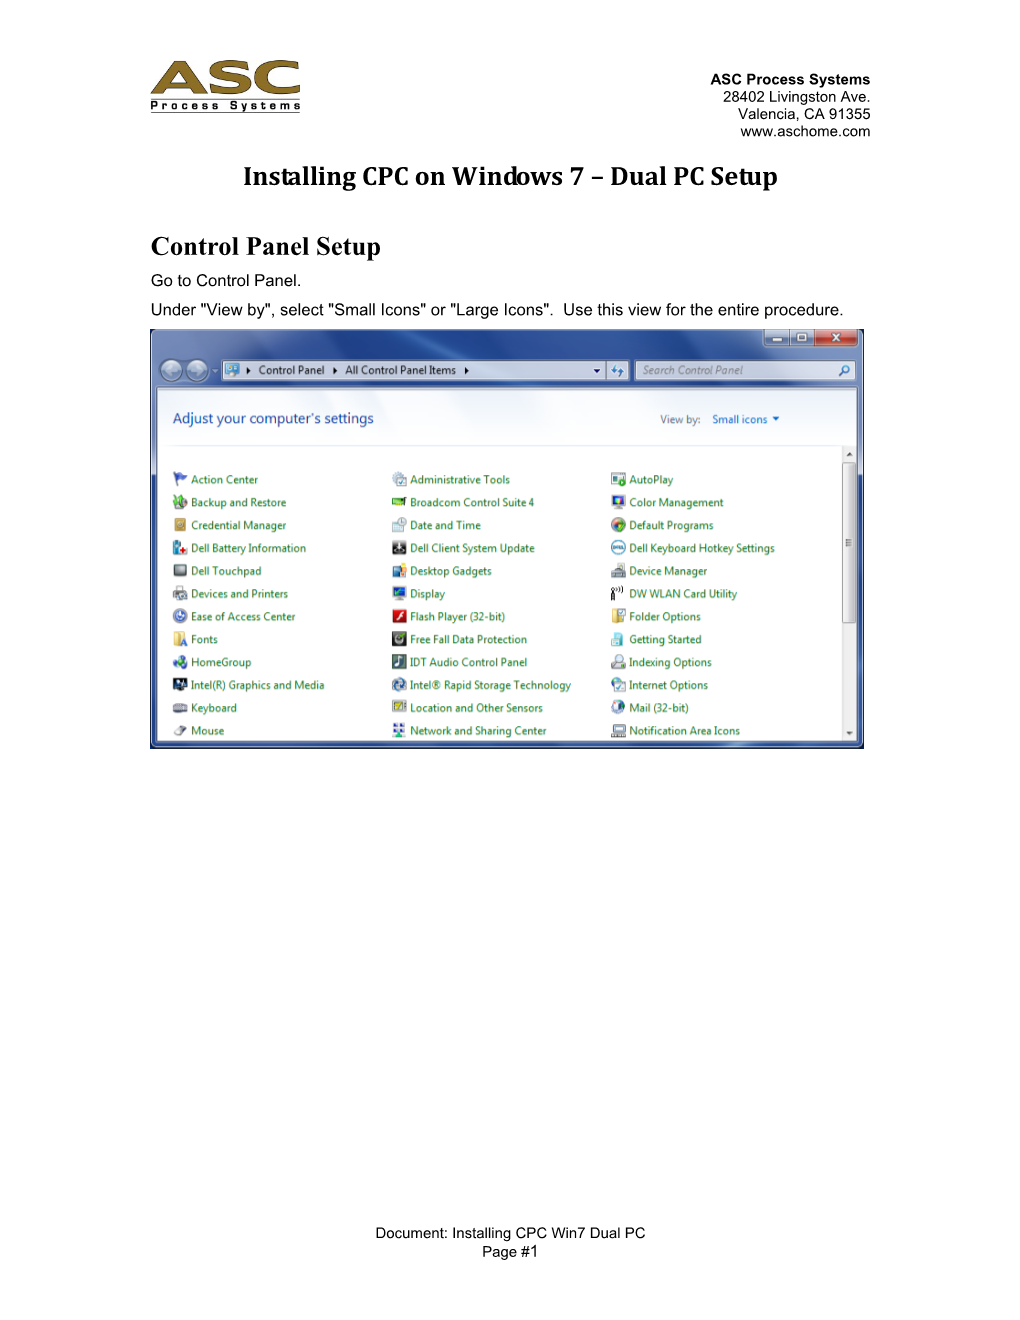 Installing CPC on Windows 7 – Dual PC Setup Control Panel Setup